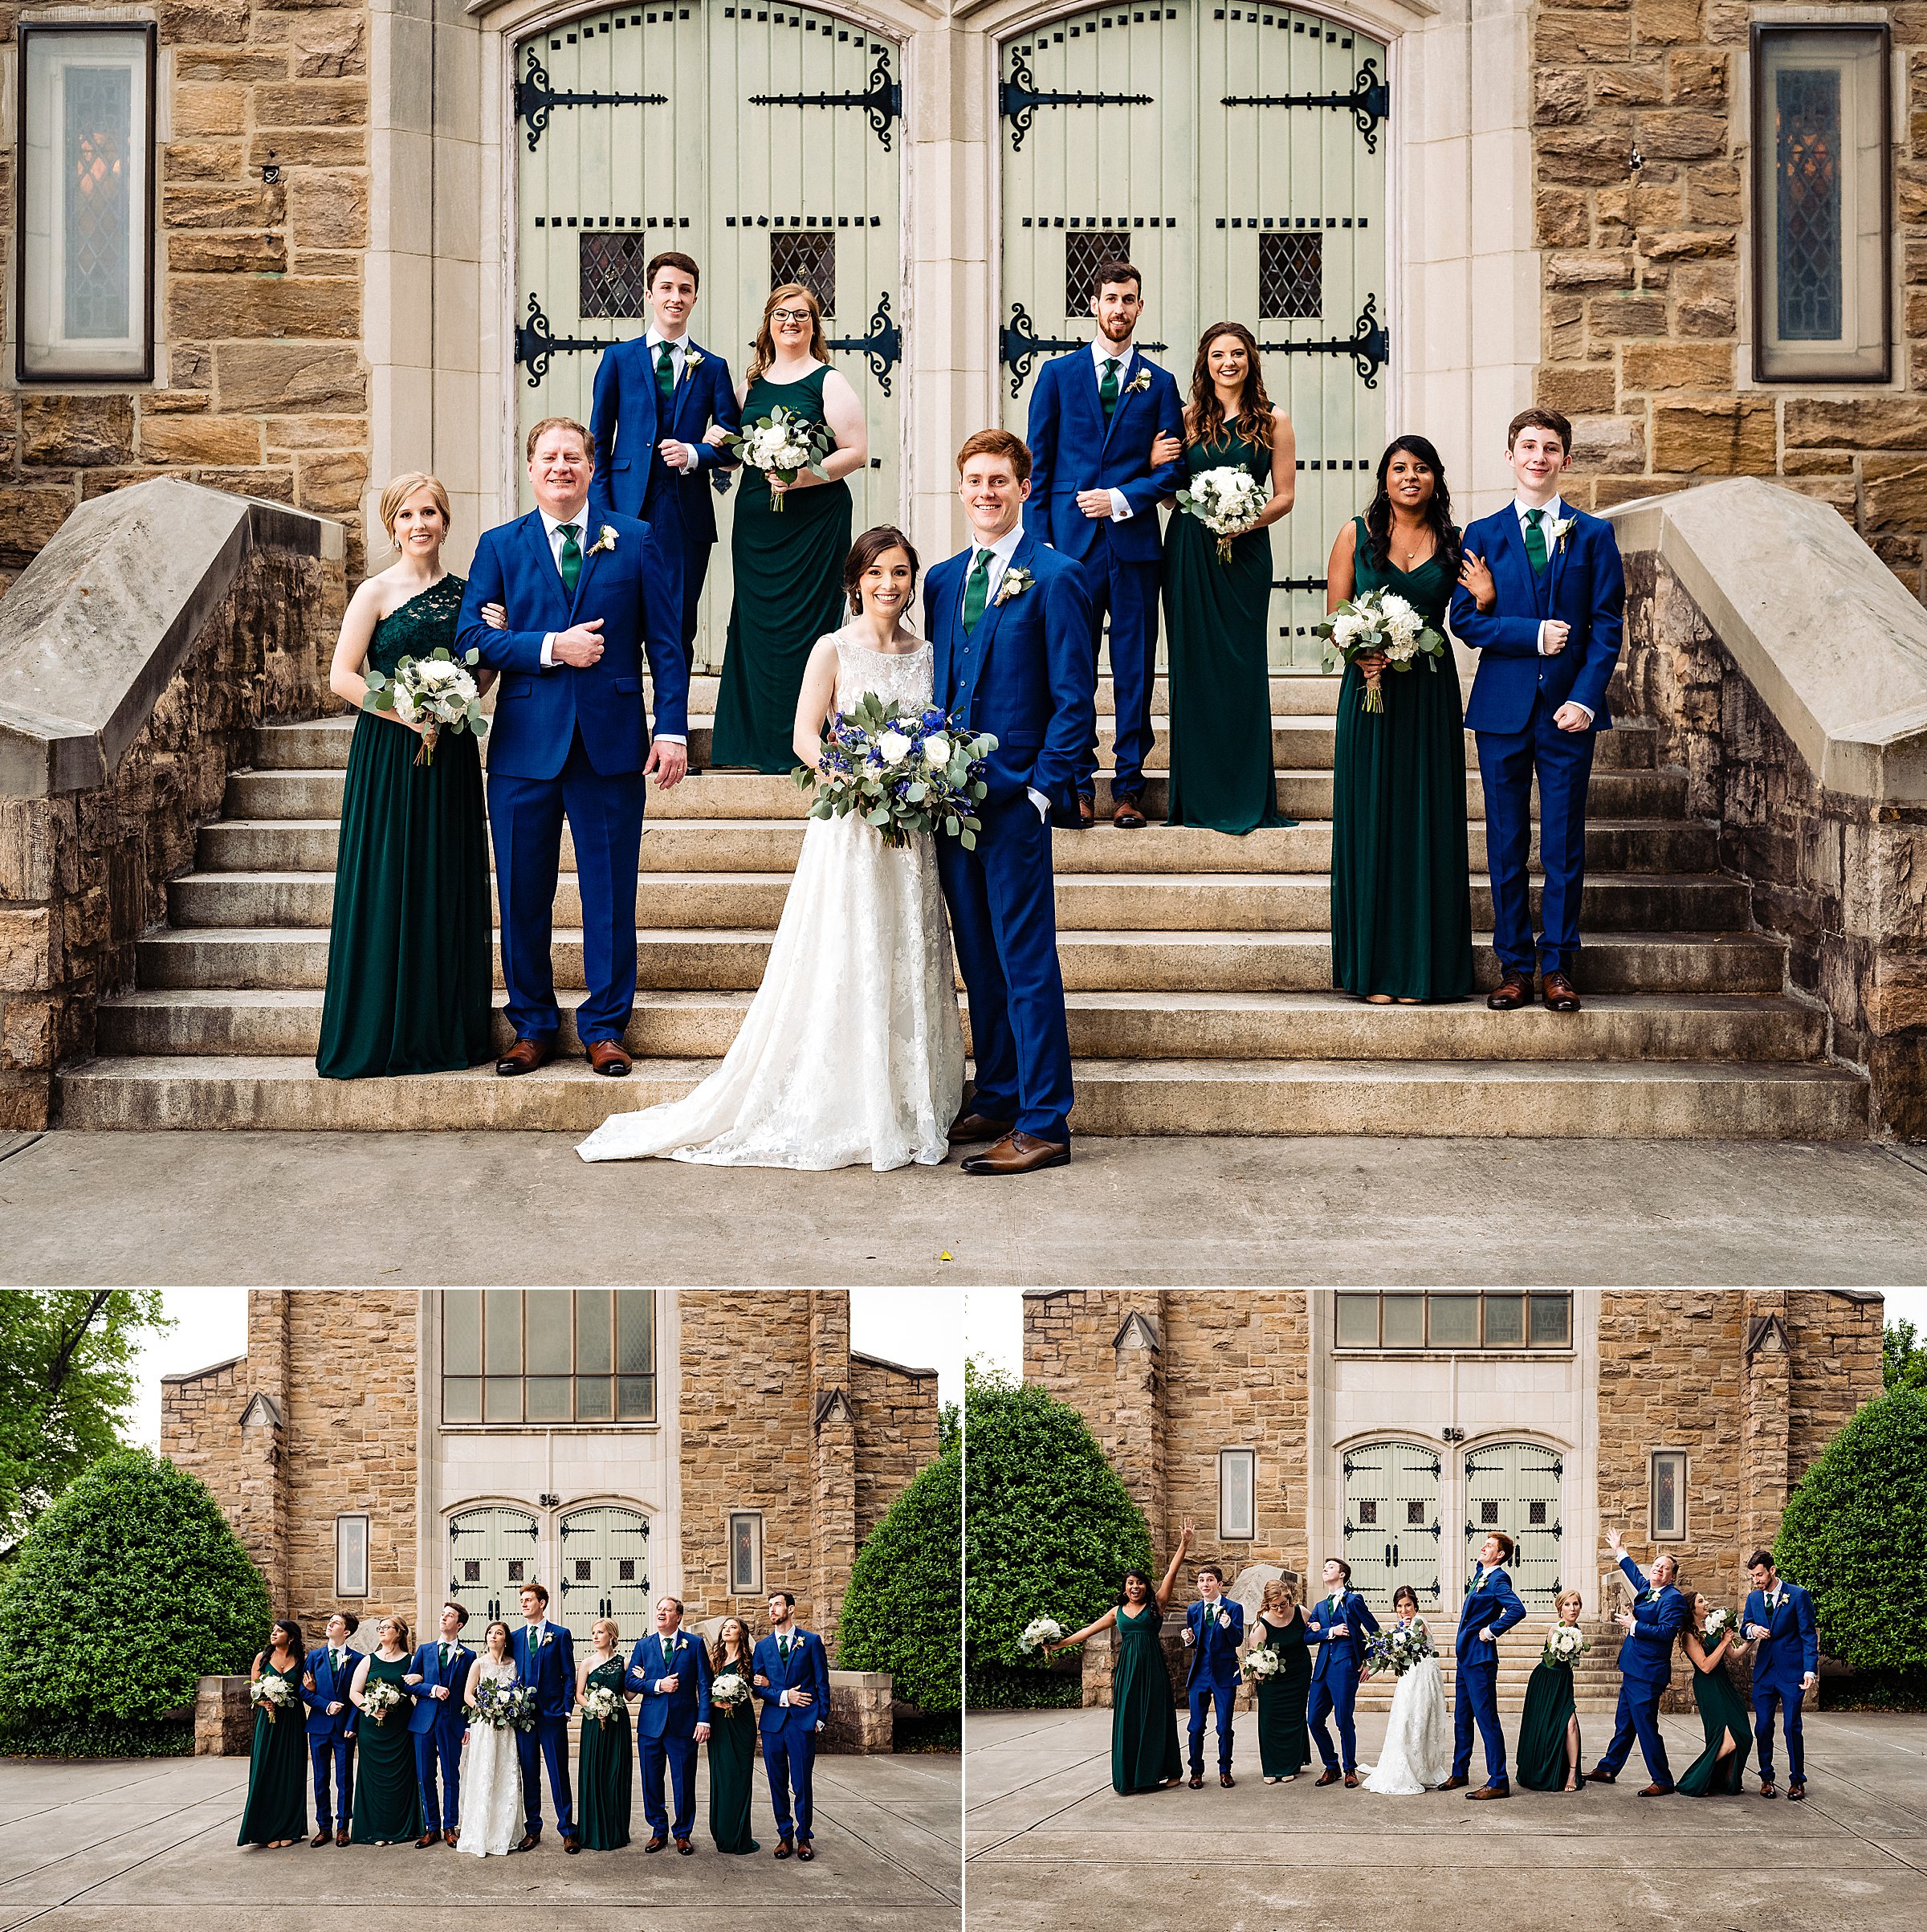 Emerald Green and Navy Blue wedding colors | North Carolina wedding photographers | kivusandcamera.com